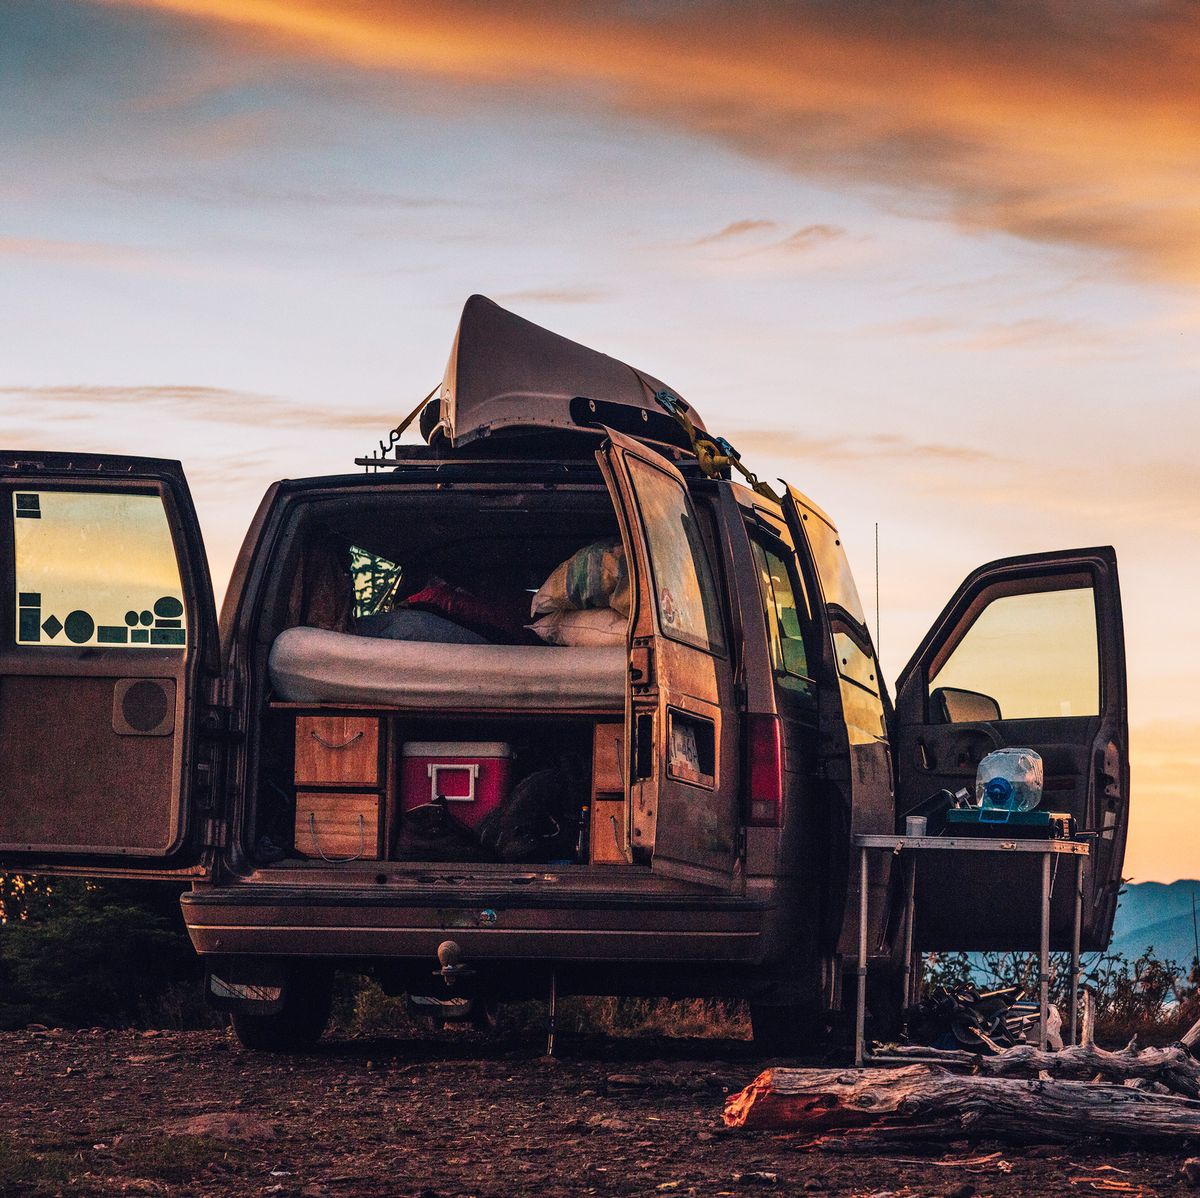 Camper van and RV Collapsible dish rack - Van Living 101